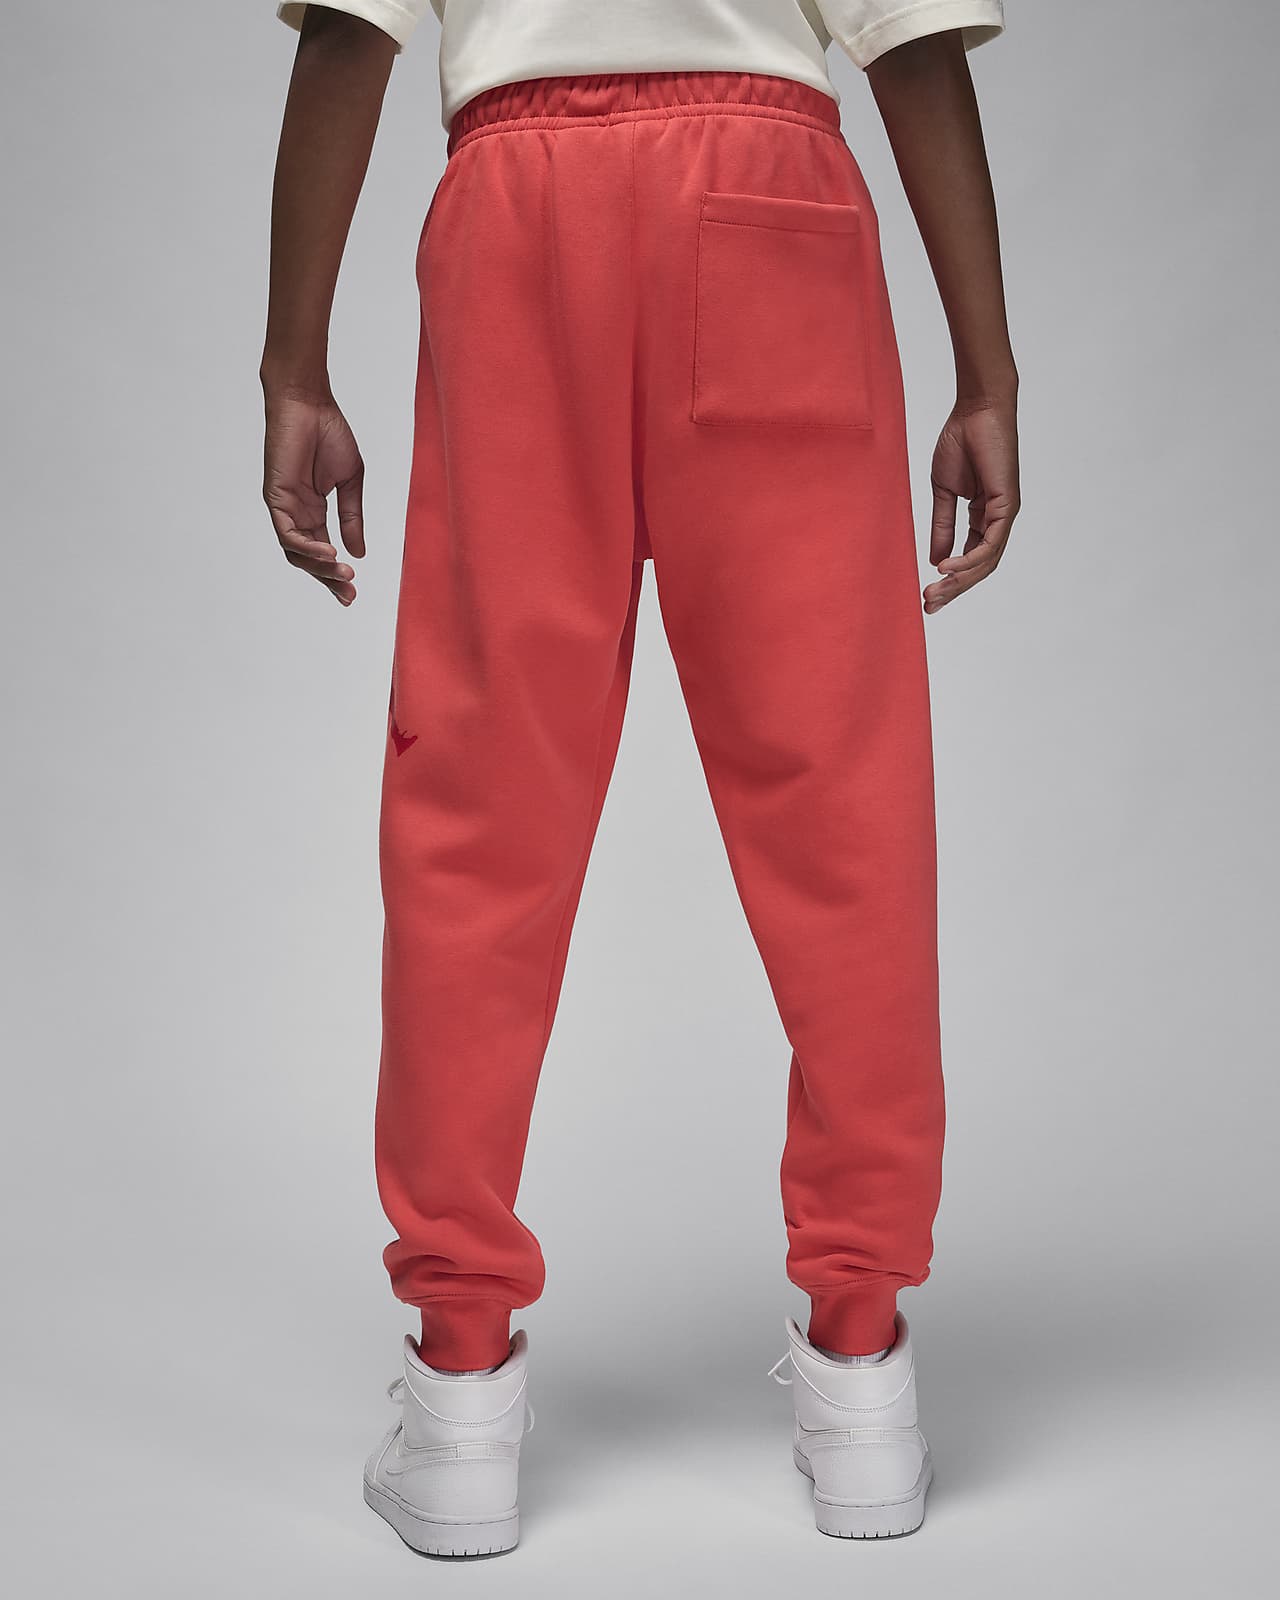 Nike Jordan fleece jogger in red